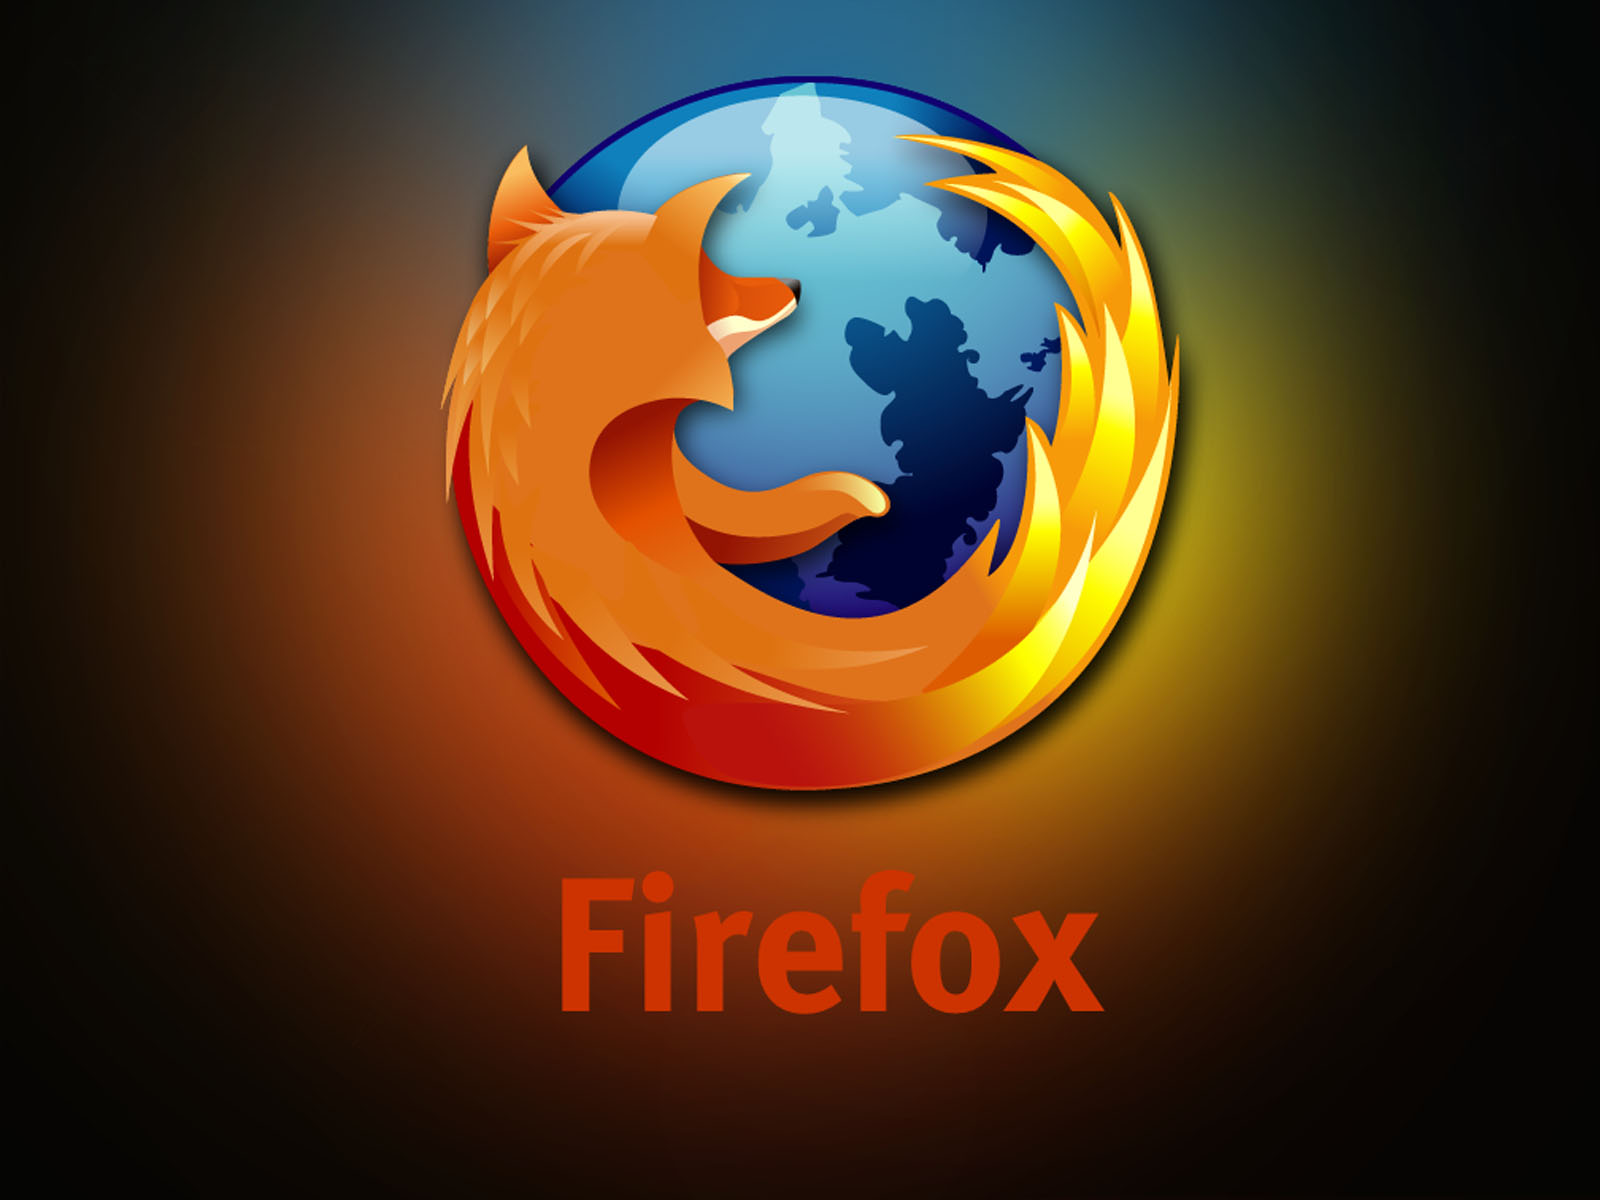 Firefox Desktopwallpaper Desktop Background